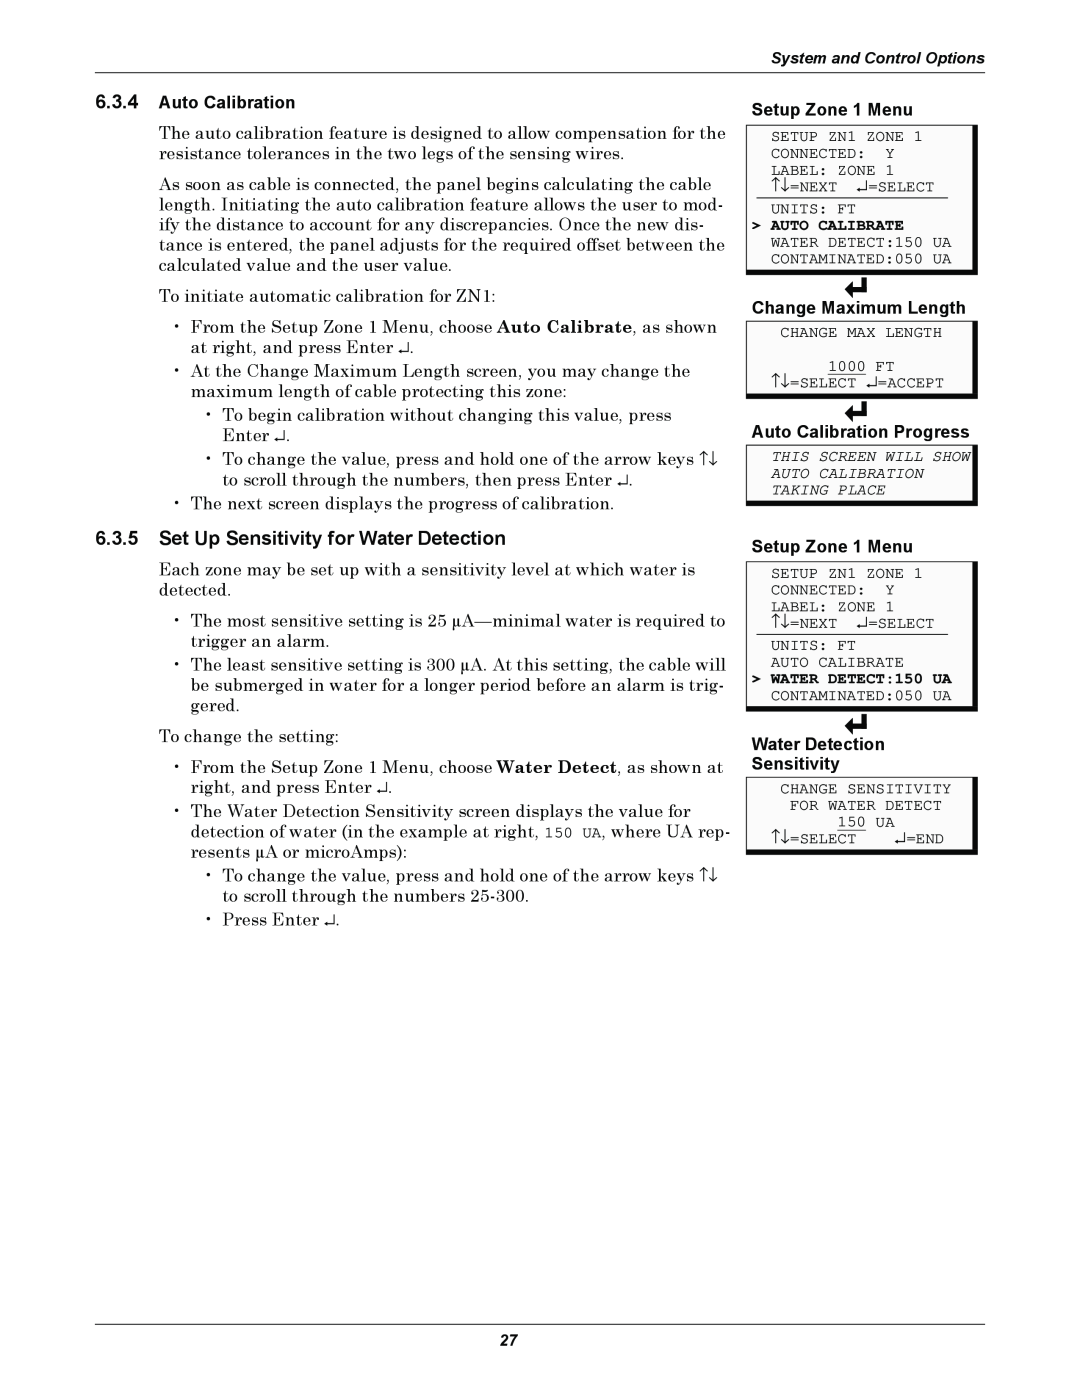 Emerson MC68HC16Z1 user manual 6.3.5Set Up Sensitivity for Water Detection, 6.3.4Auto Calibration, Setup Zone 1 Menu 